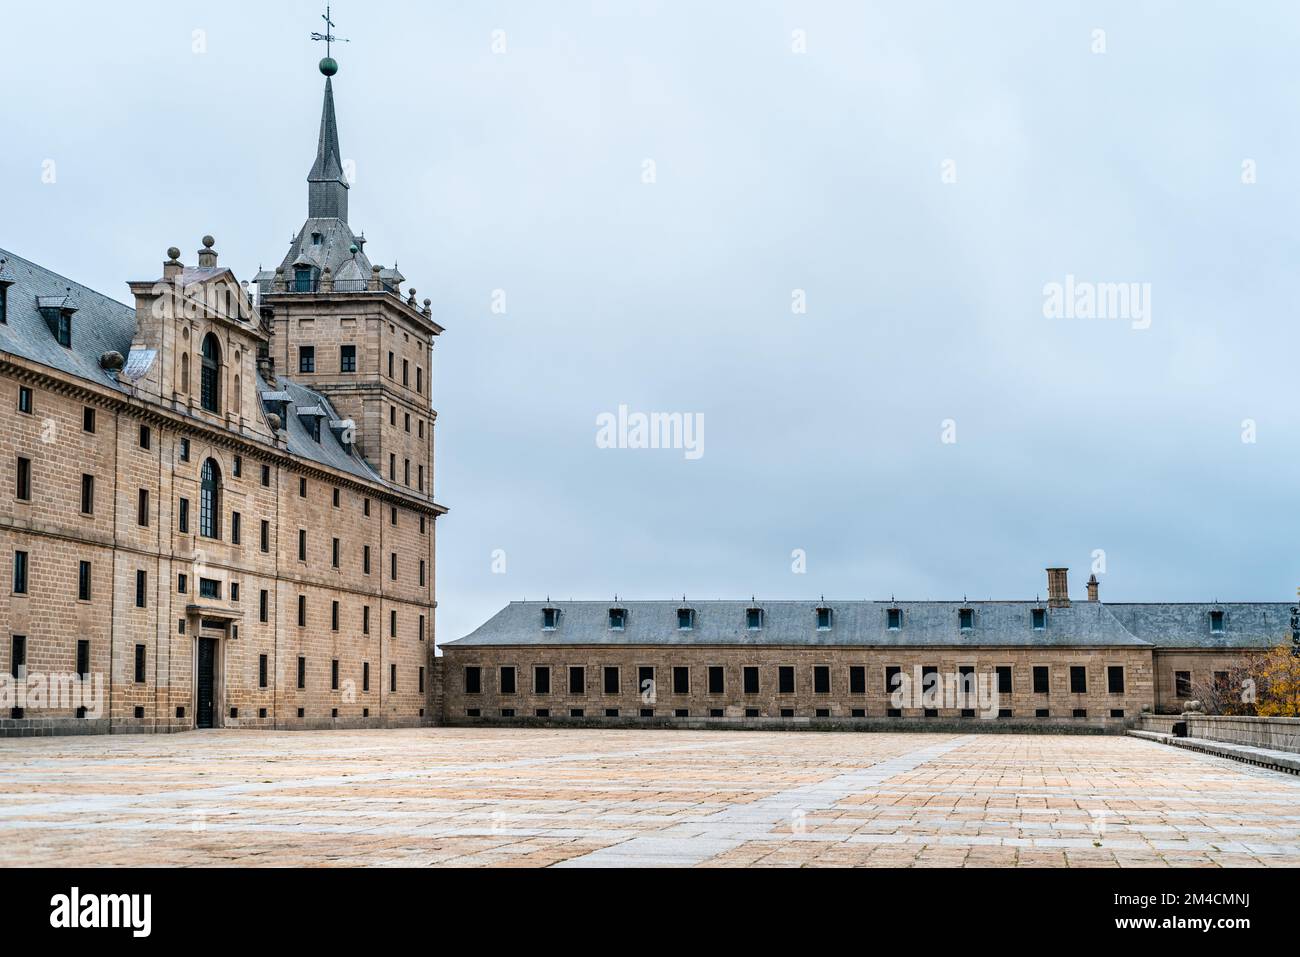 Royal Monastery of San Lorenzo de El Escorial near Madrid, Spain Stock Photo